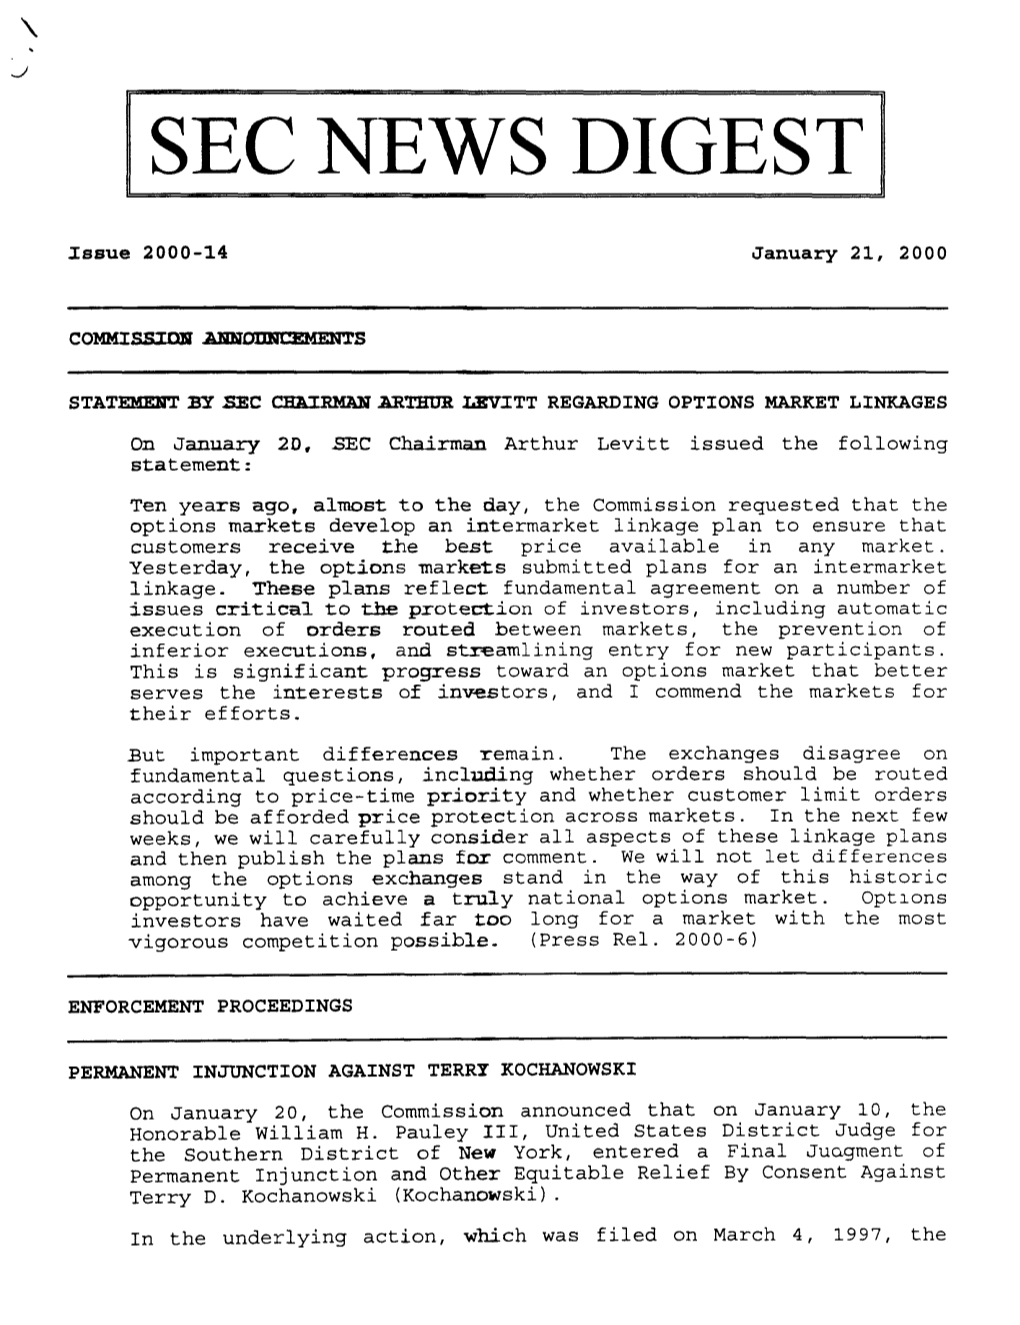 SEC News Digest, 01-21-2000